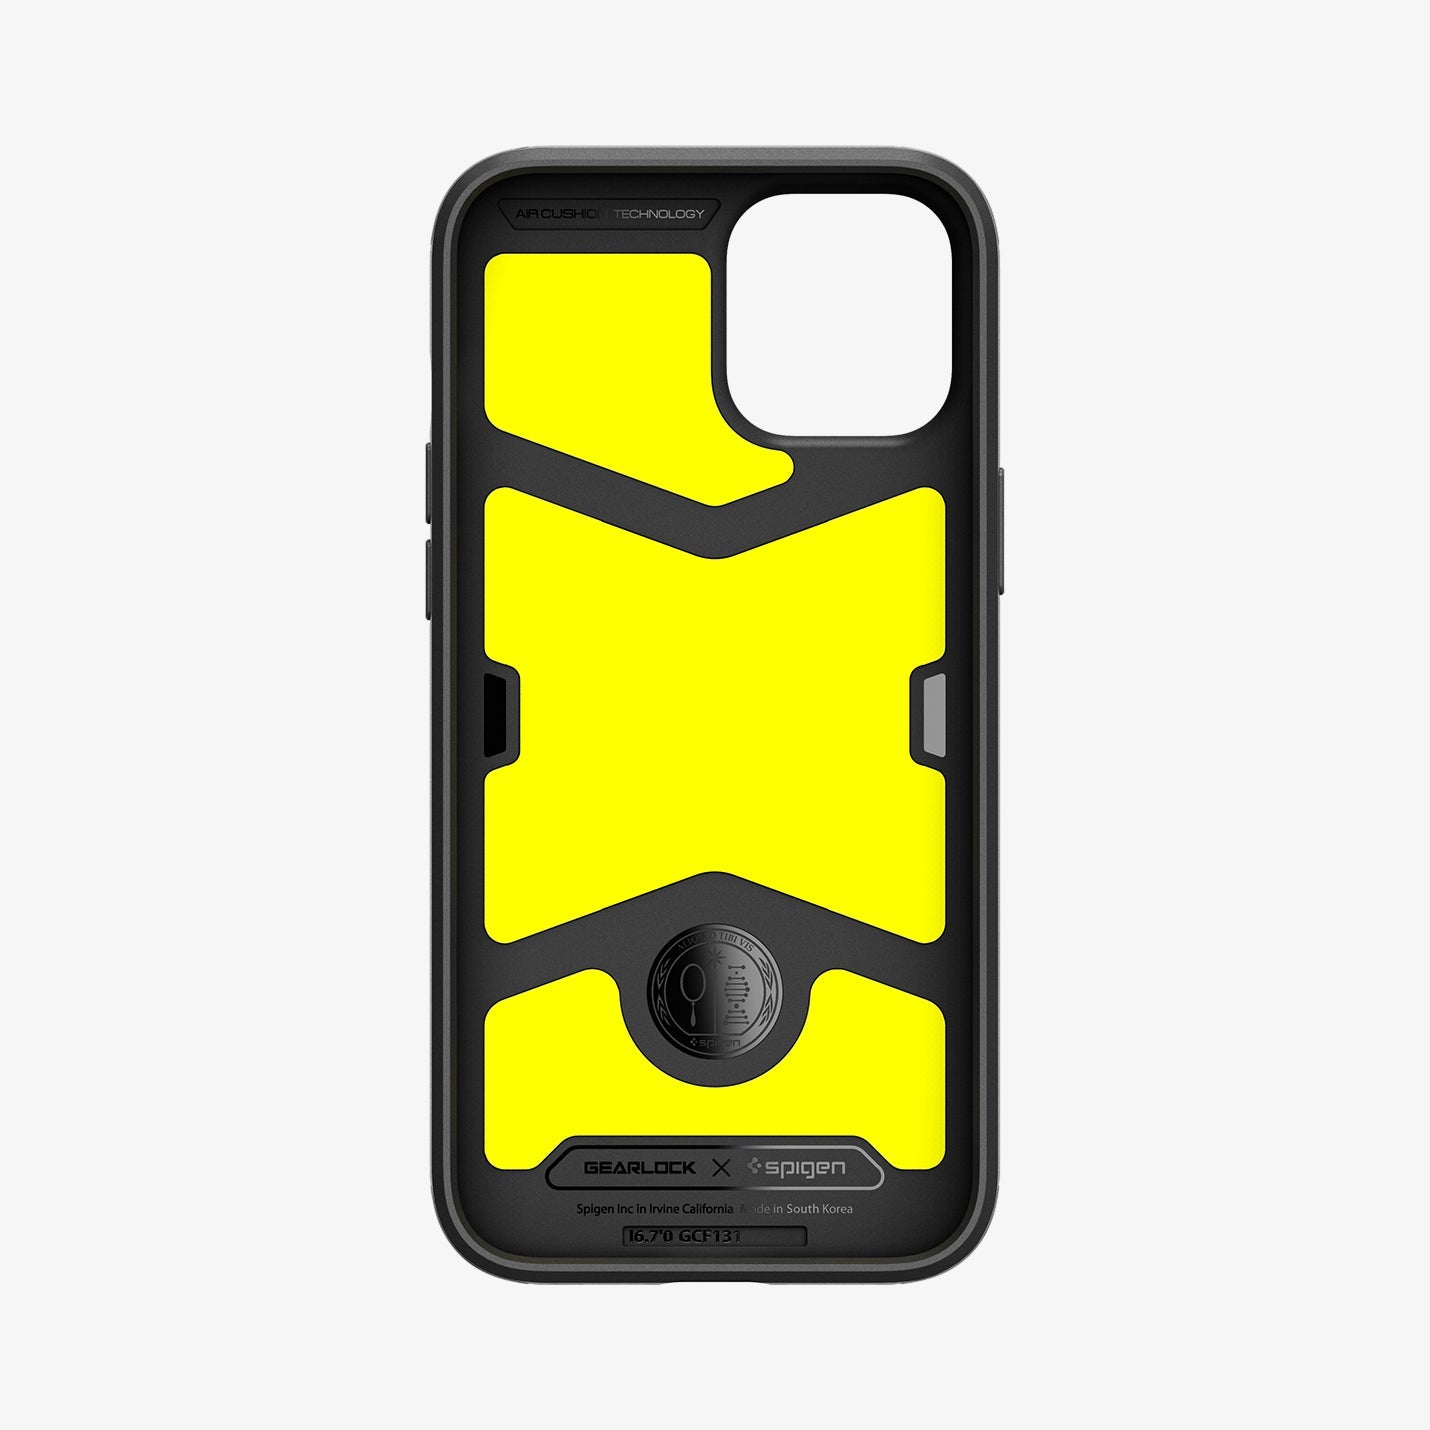 ACS01587 - Black Gearlock iPhone 12 Pro Max Bike Mount Case showing the inside of case